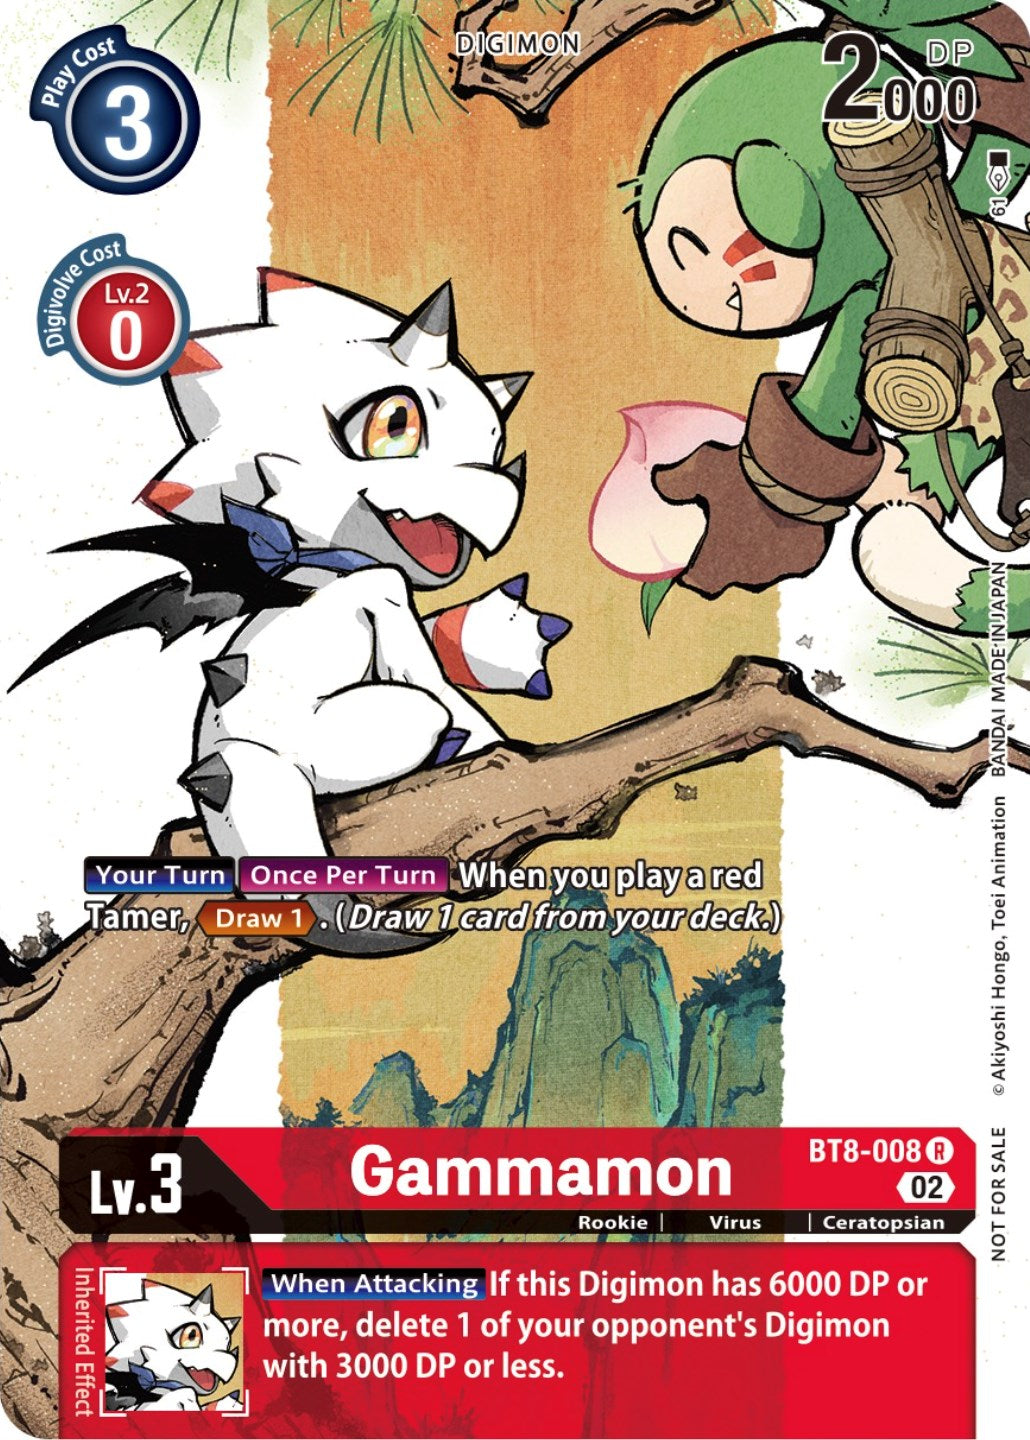 Gammamon [BT8-008] (Digimon Illustration Competition Promotion Pack) [New Awakening Promos] | Play N Trade Winnipeg